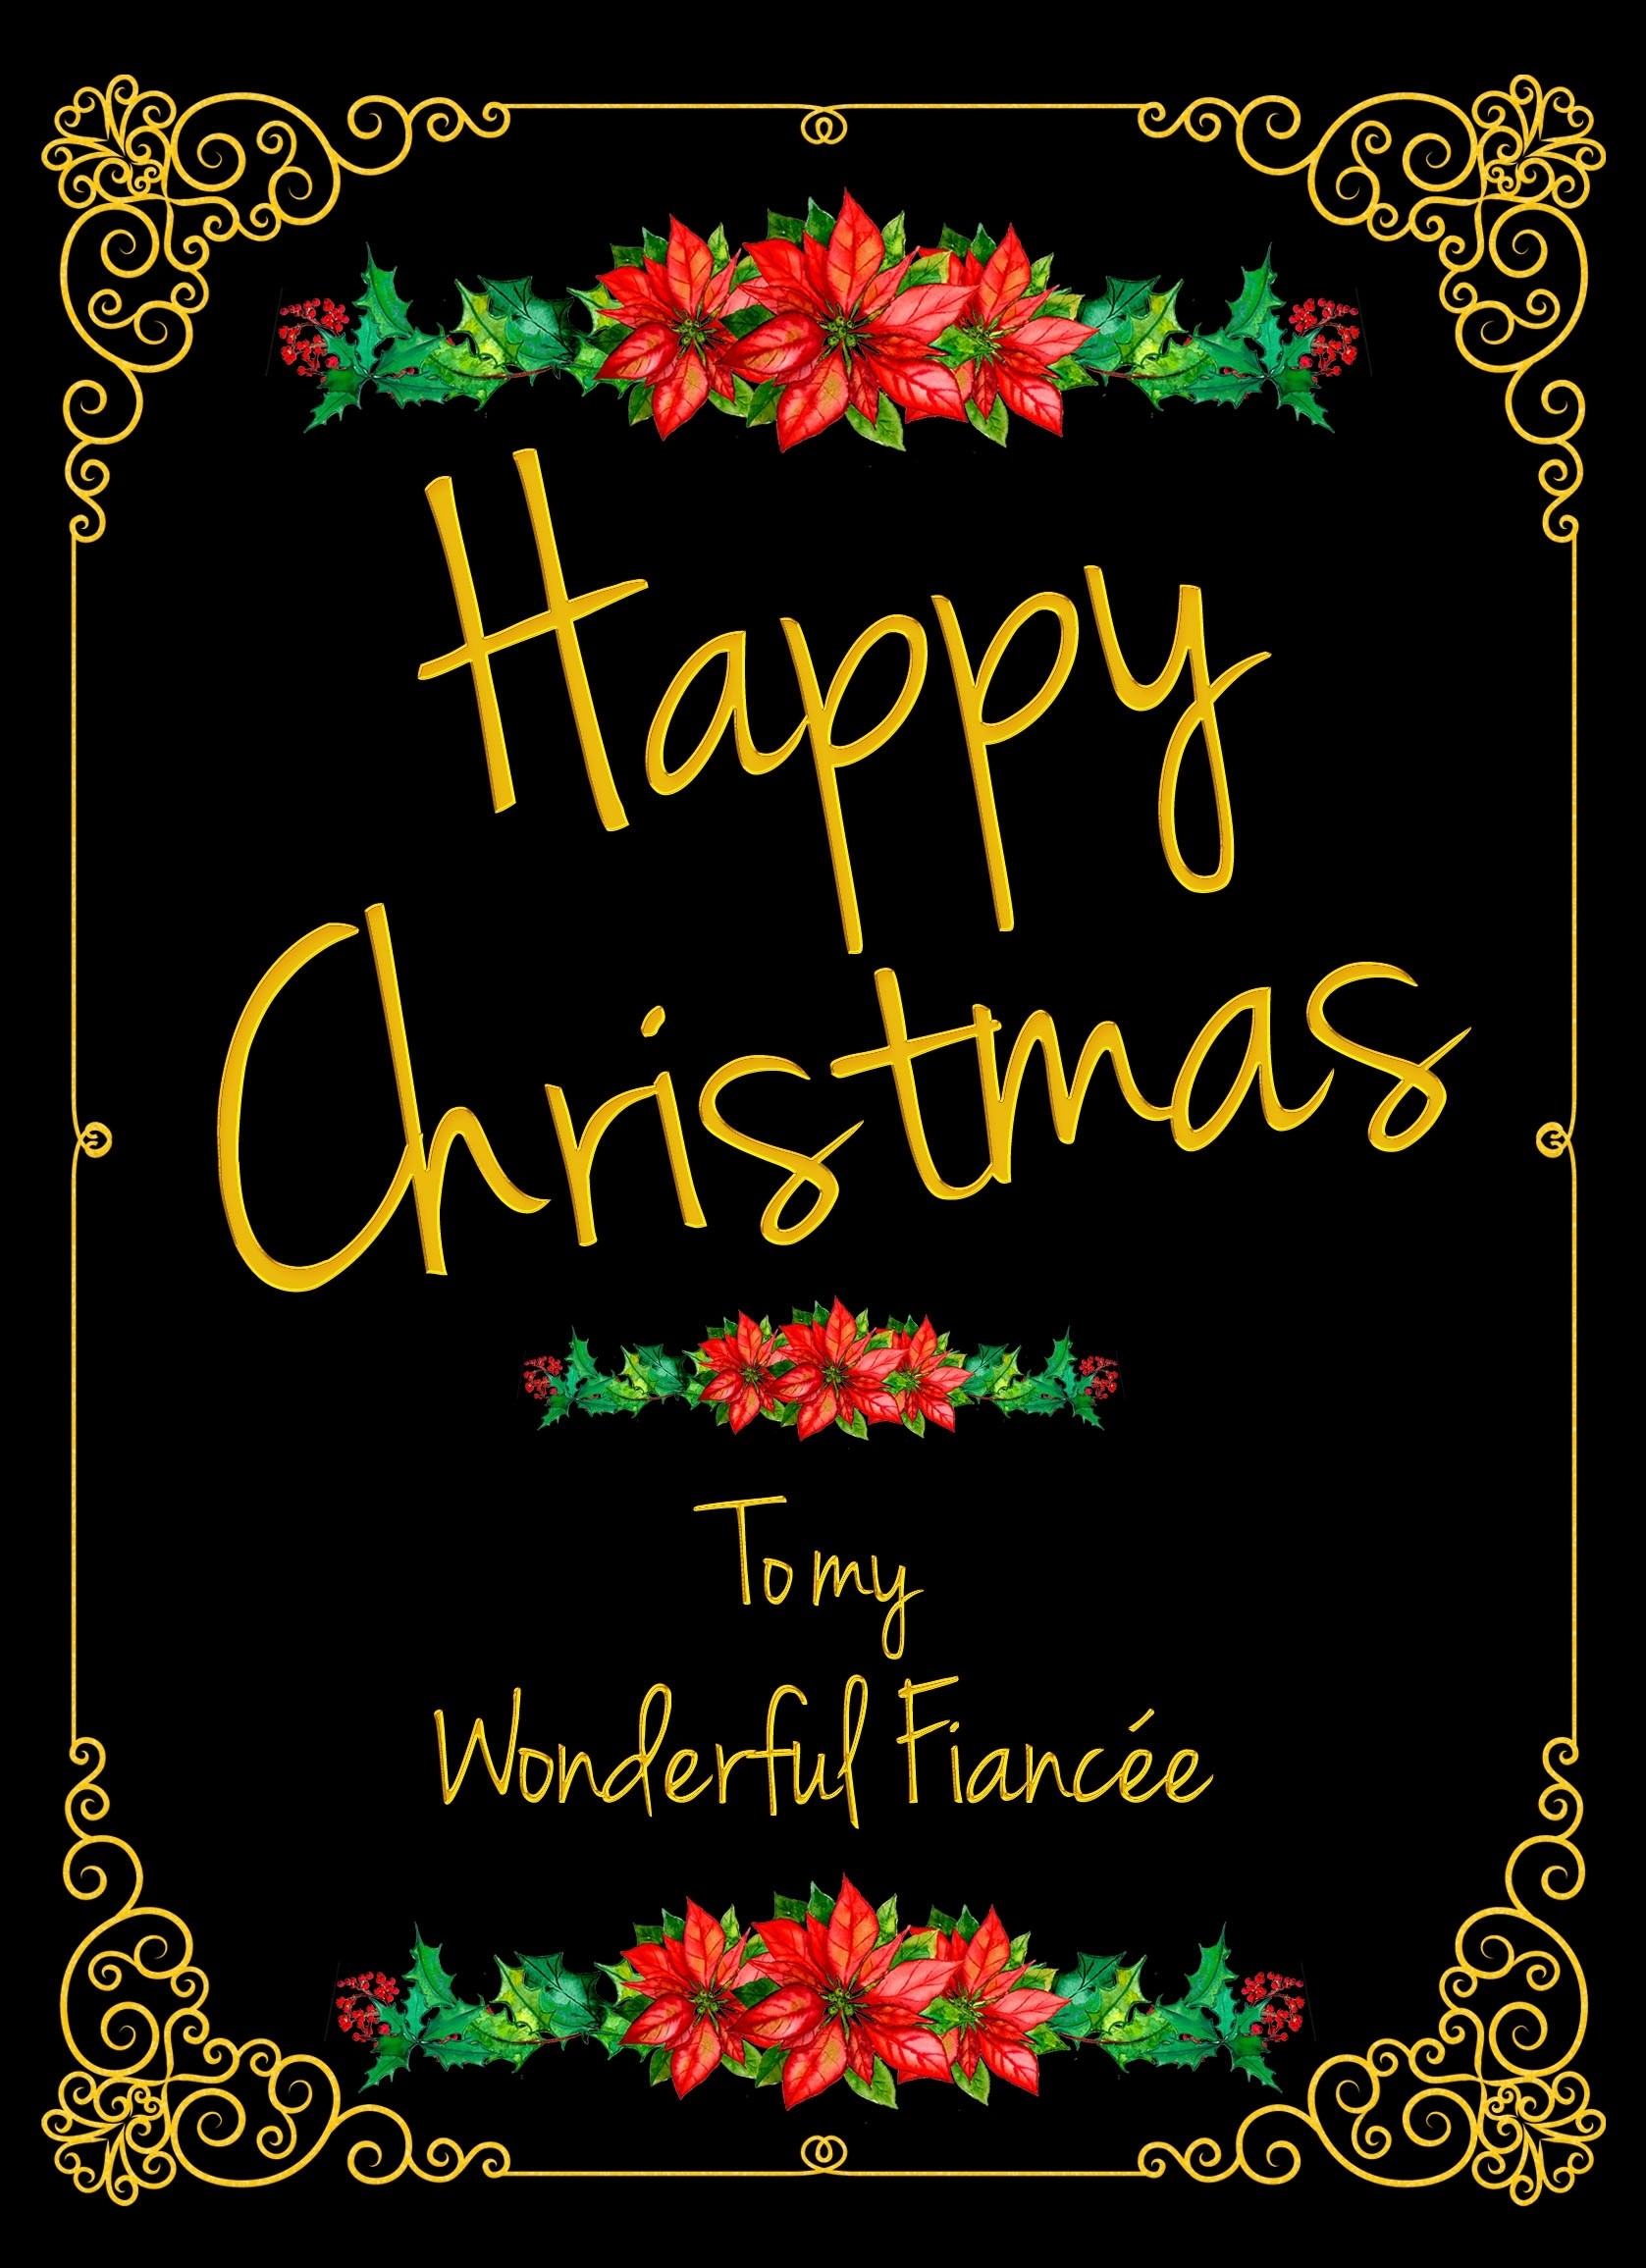 Christmas Card For Fiancee (Wonderful)